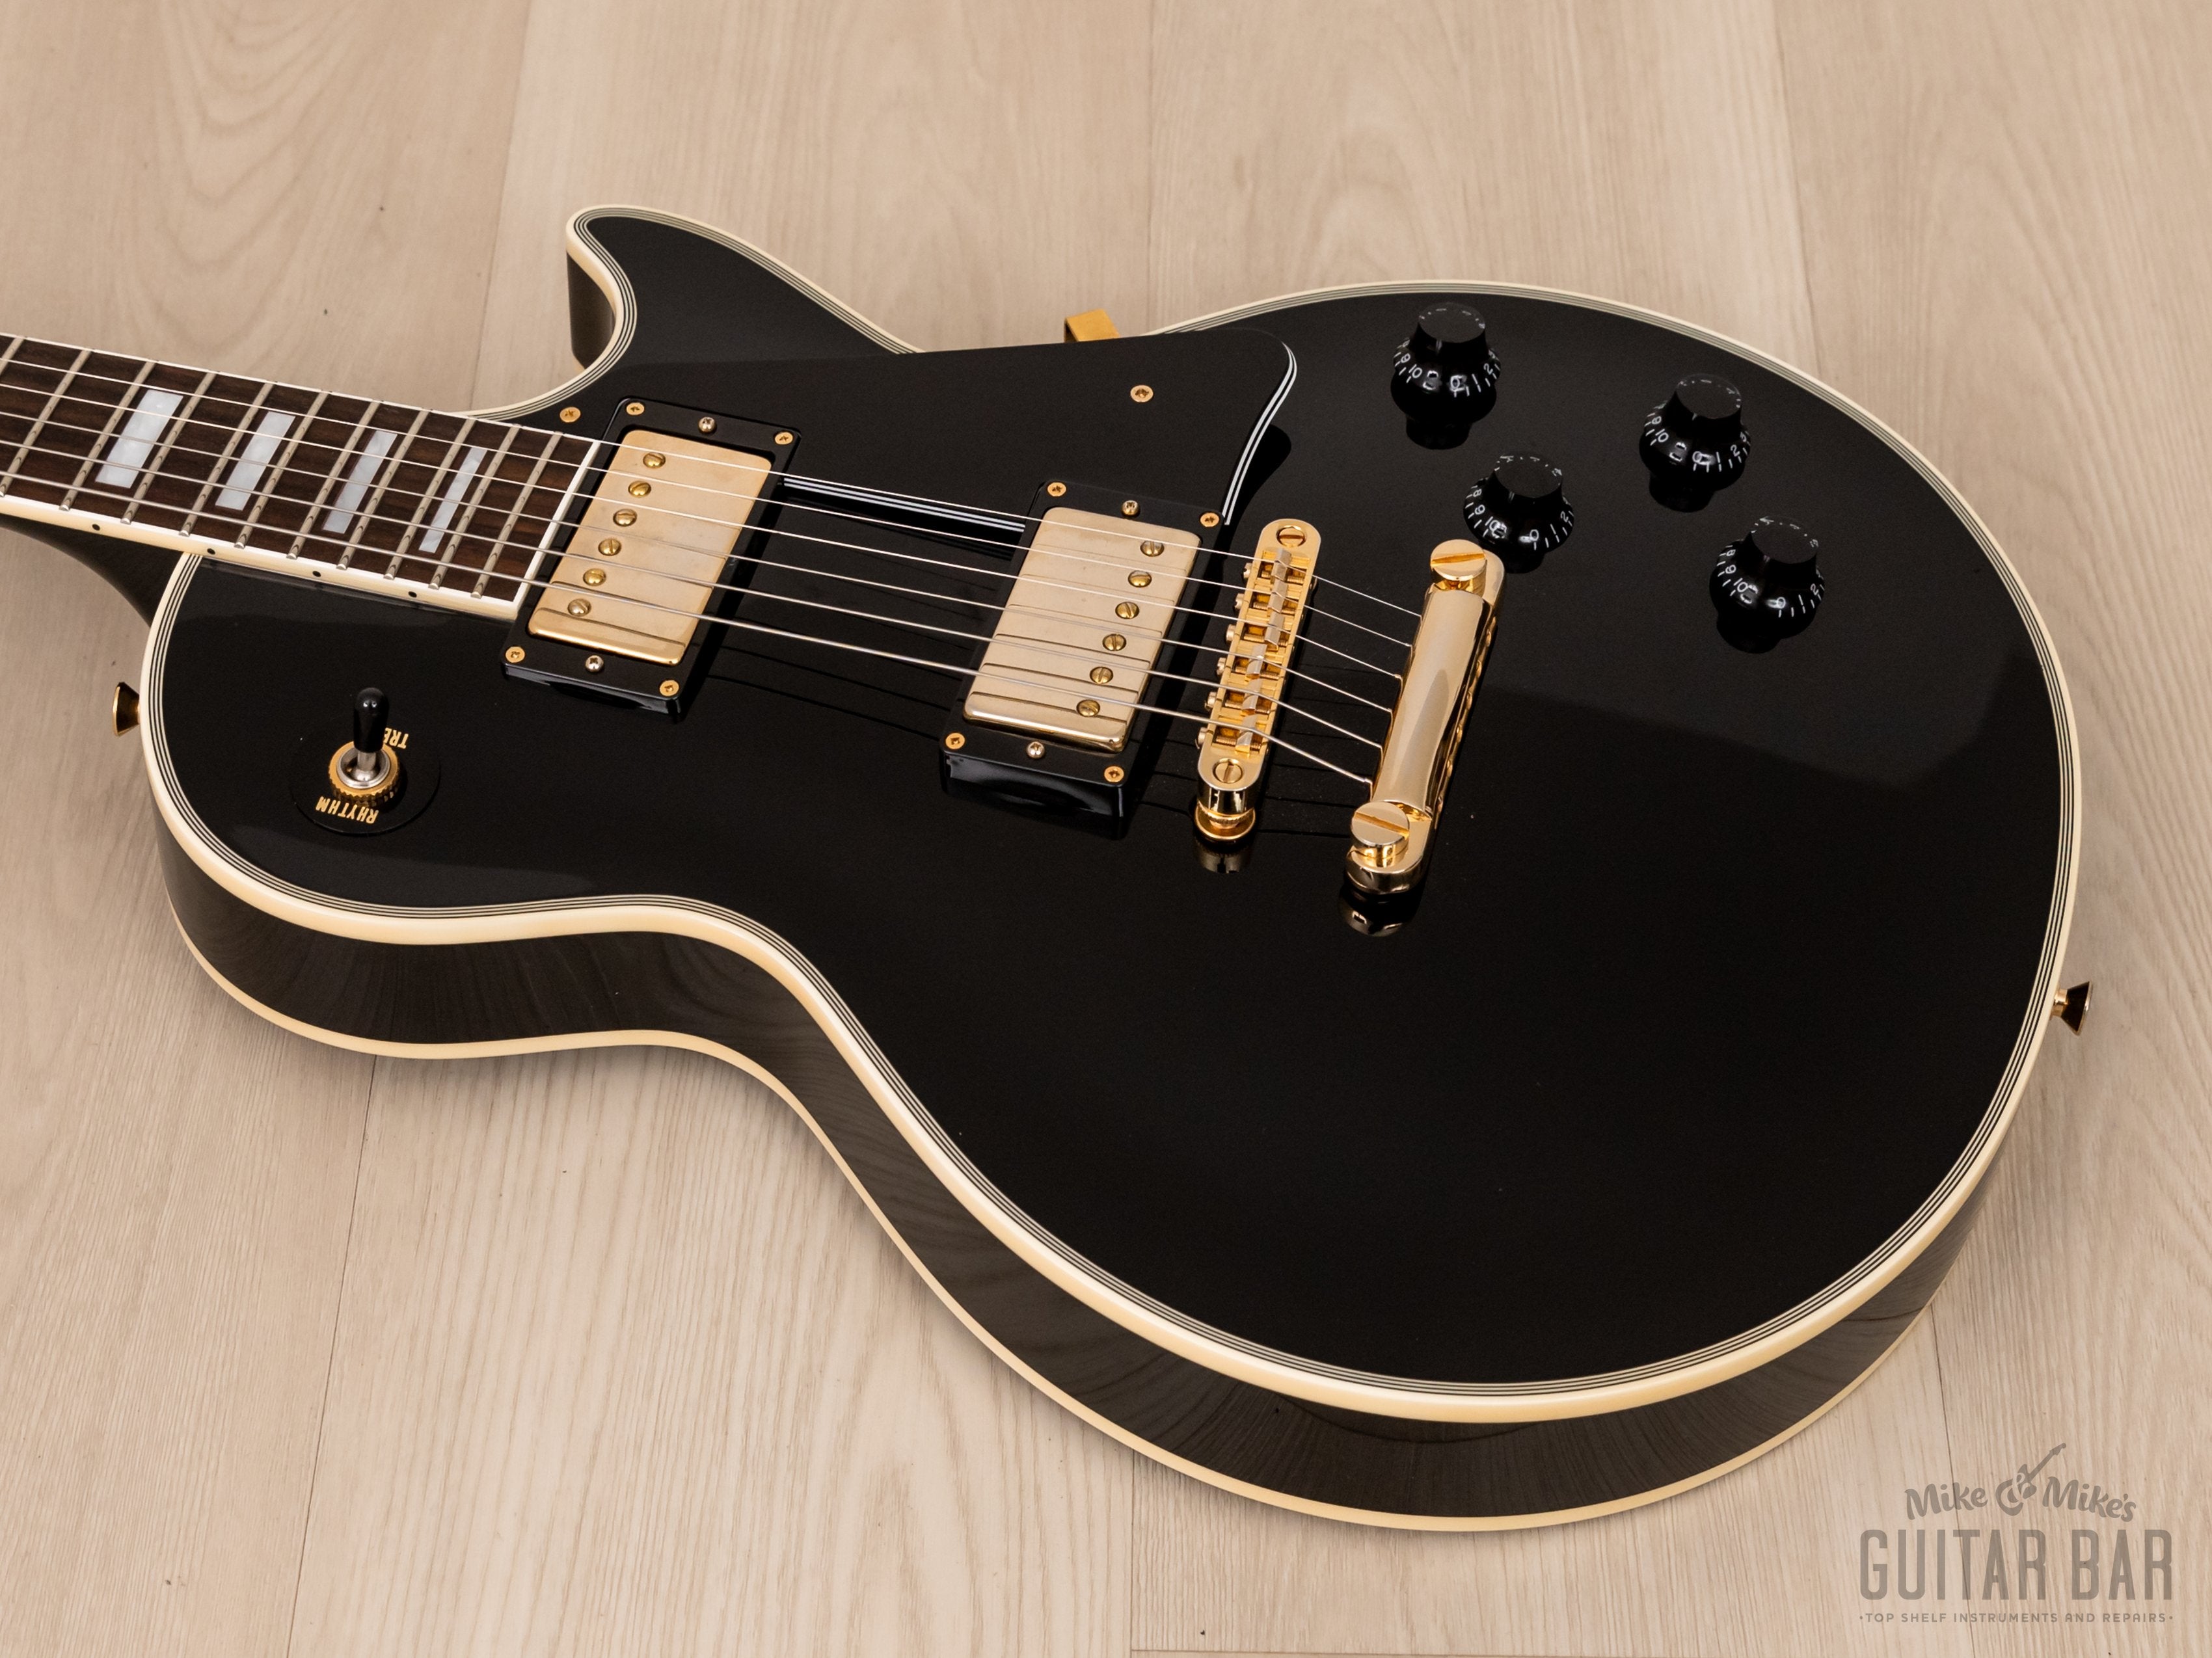 2009 Burny RLC-85 Custom Black Beauty Electric Guitar w/ Hangtags, Japan Fernandes